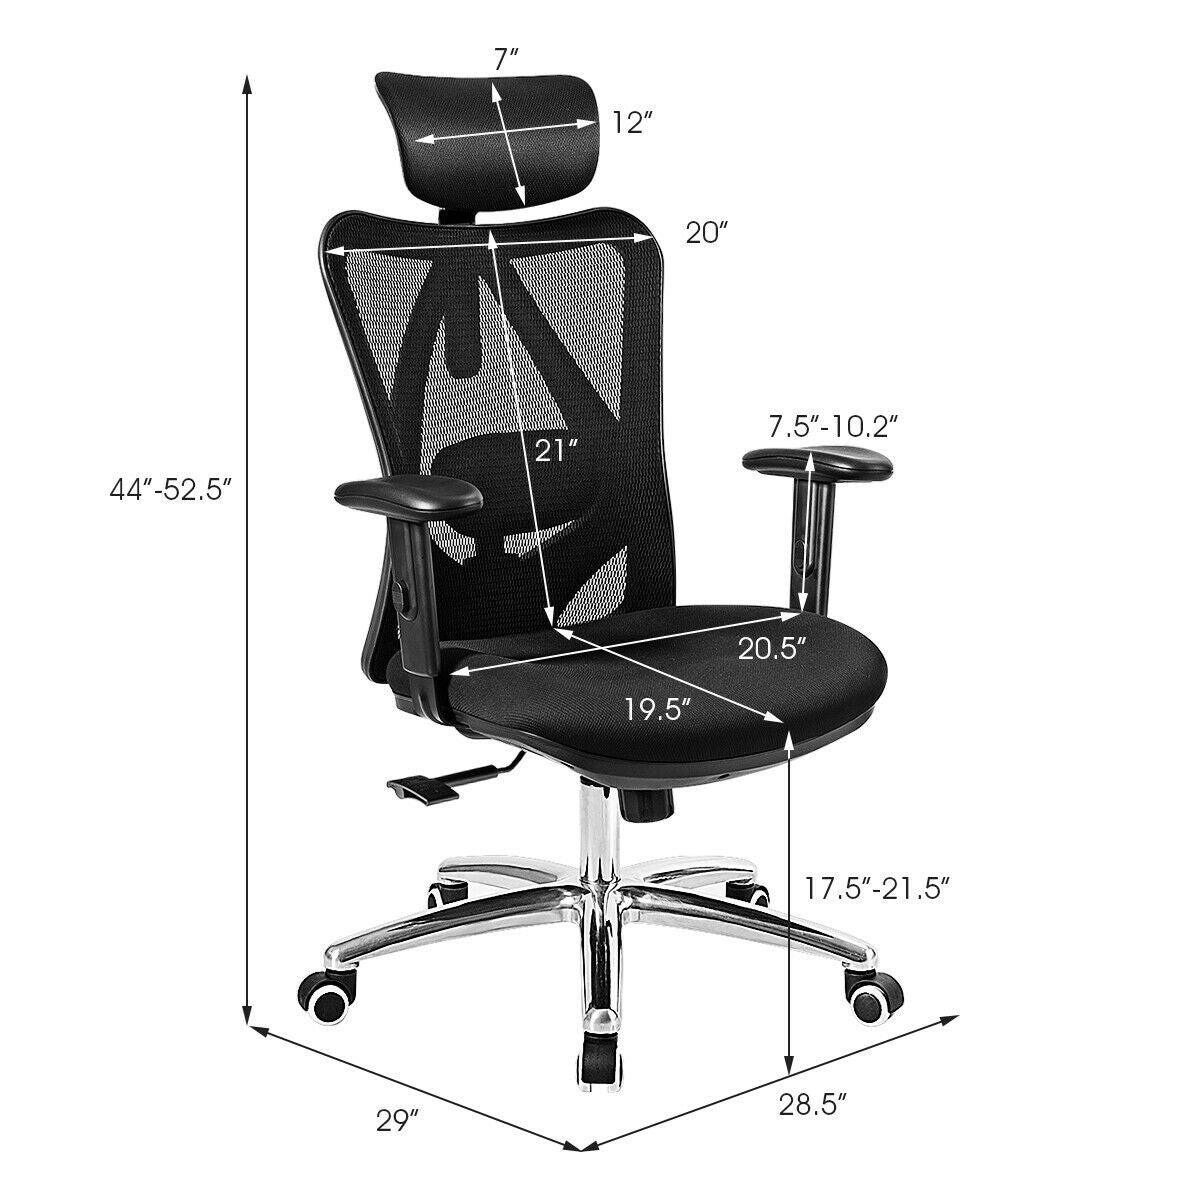 Giantex Ergonomic Office Chair, Mesh Back Office Chair